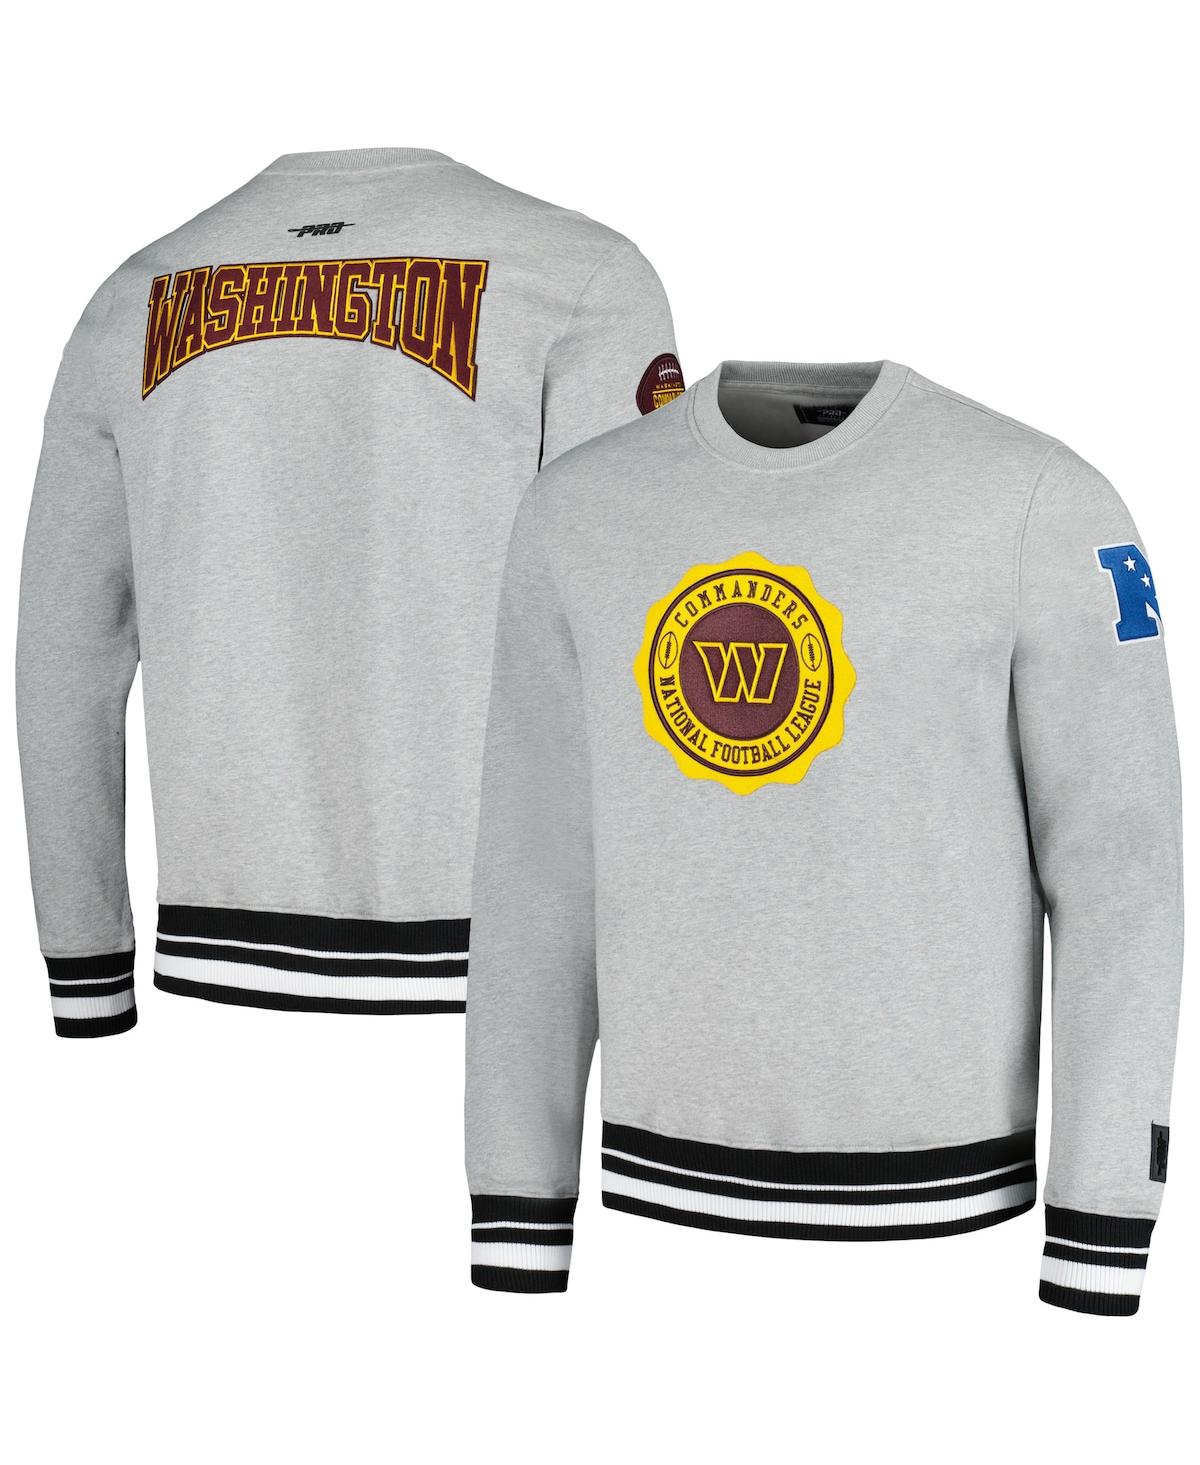 Shop Pro Standard Men's  Heather Gray Washington Commanders Crest Emblem Pullover Sweatshirt